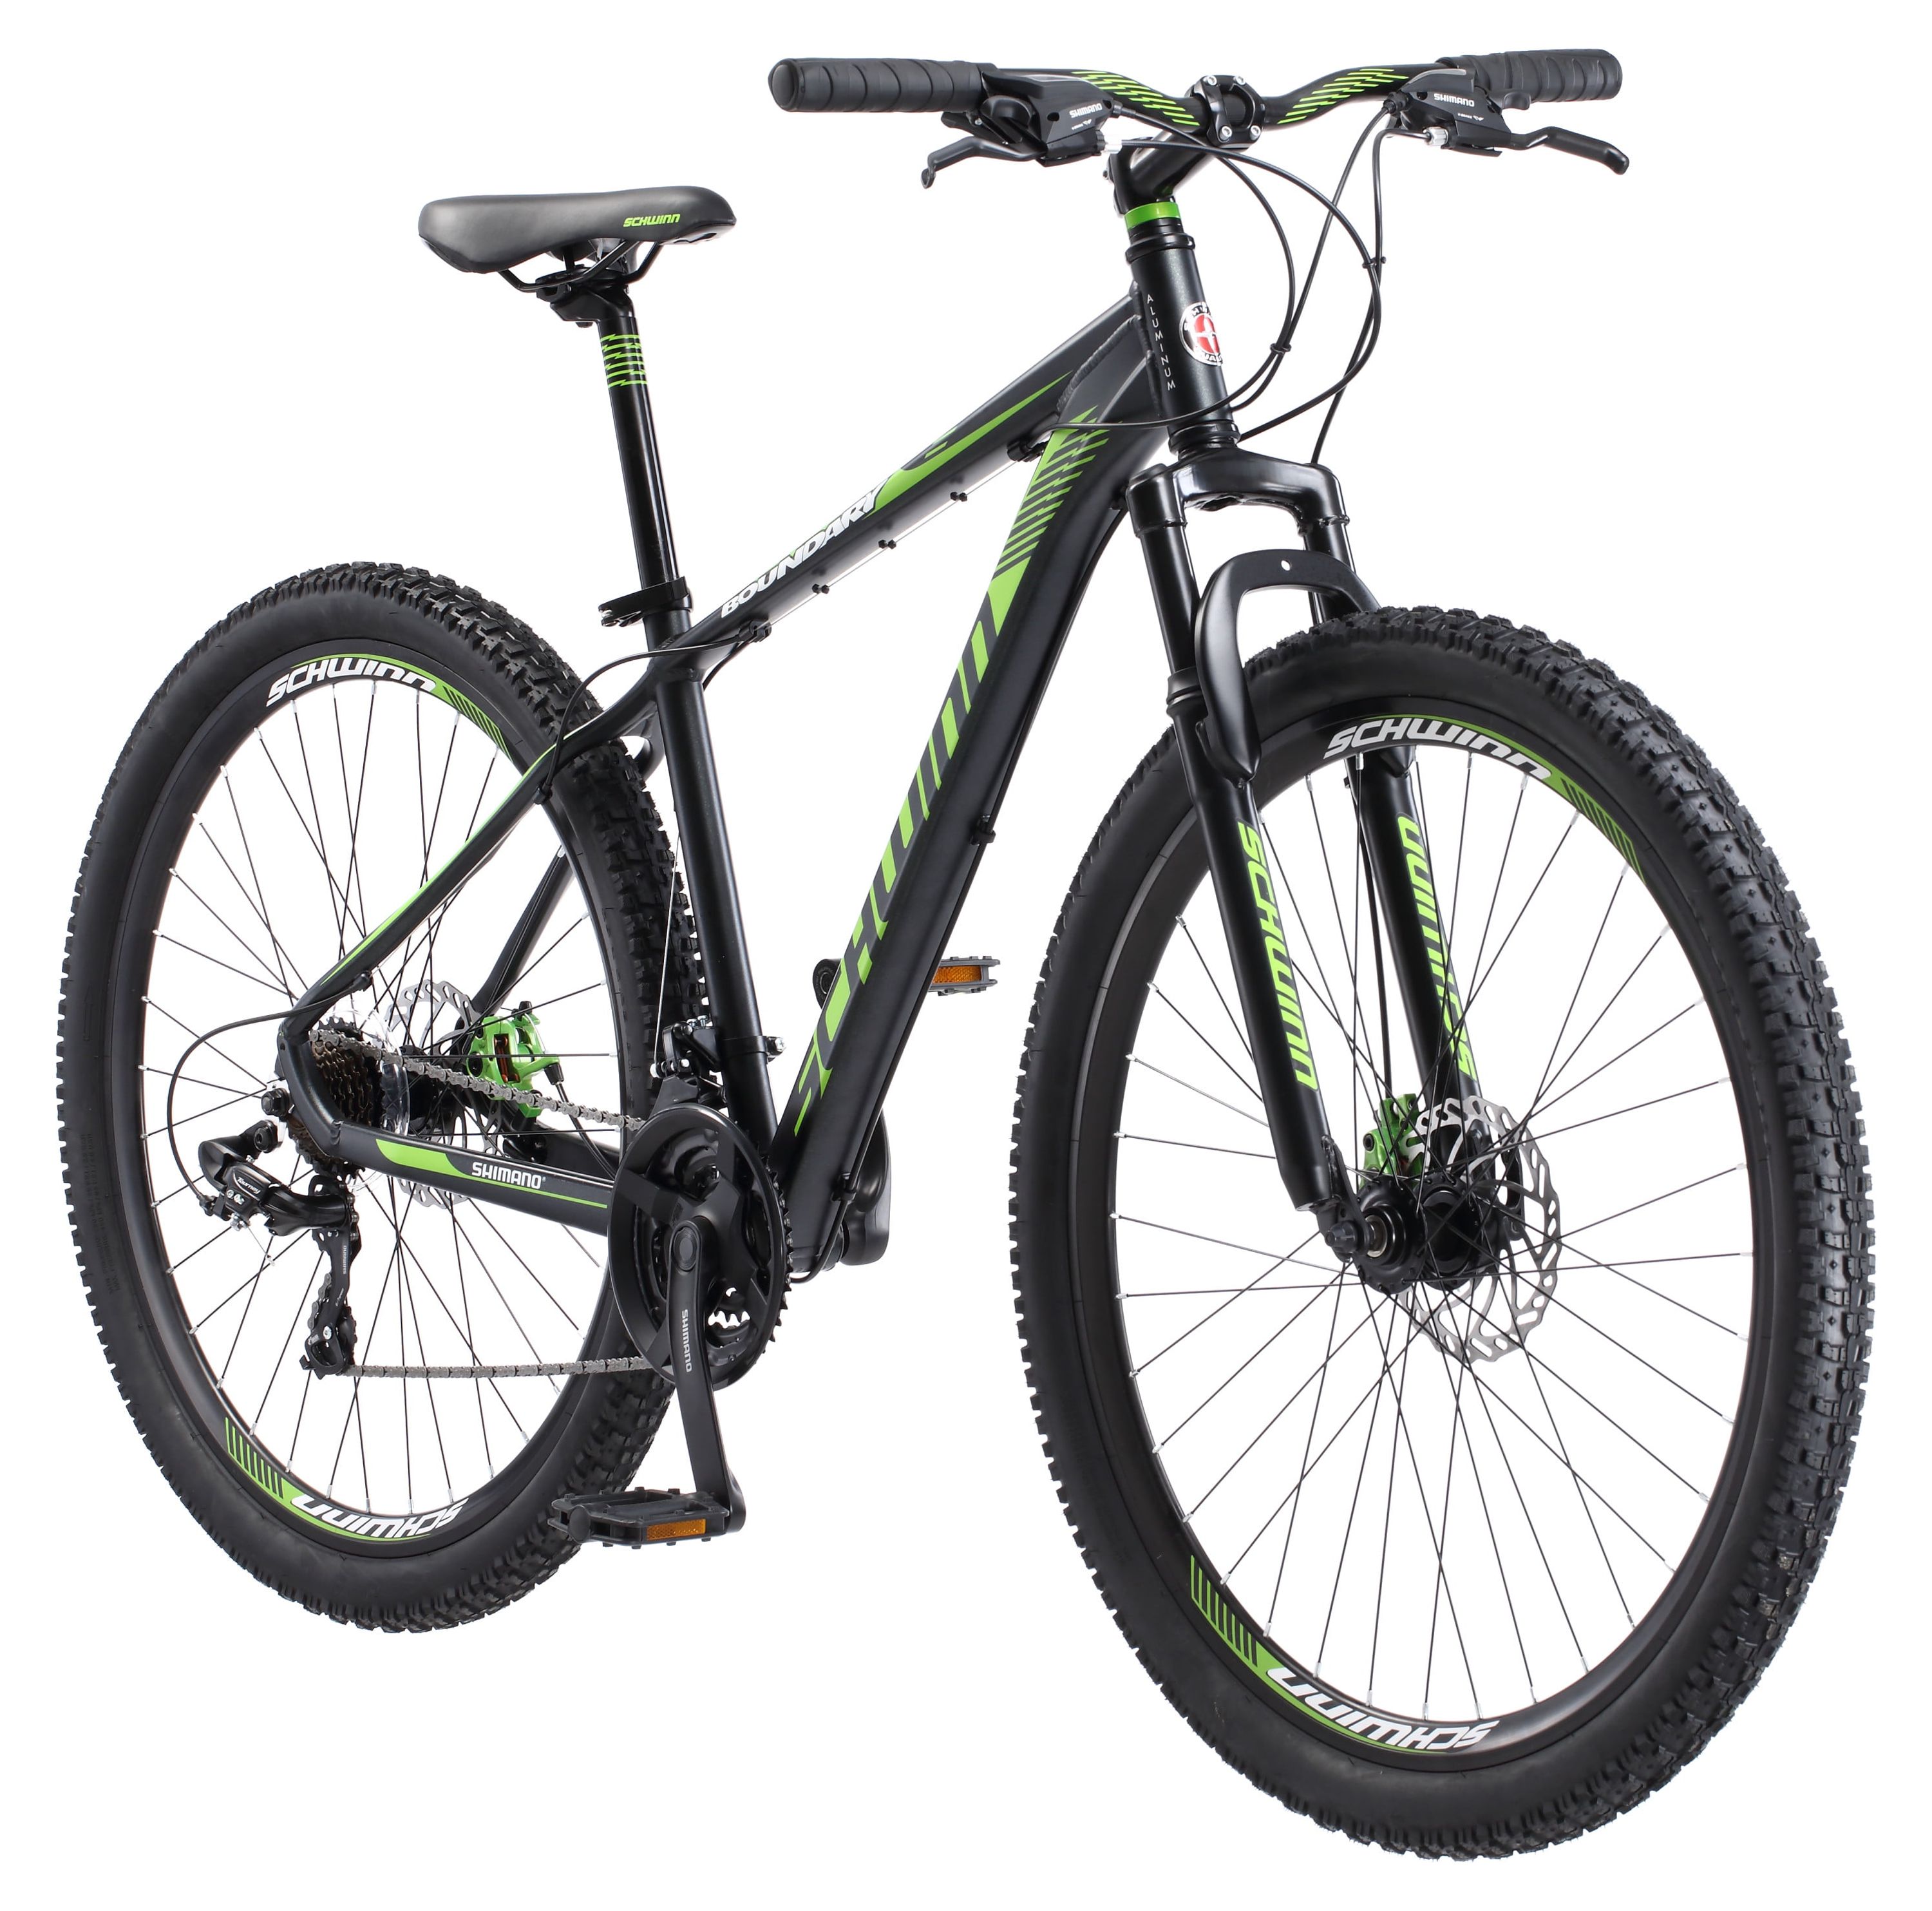 Schwinn Boundary Men's Mountain Bike, 29-inch wheels, 21 speeds, Dark Green and Black - image 1 of 8